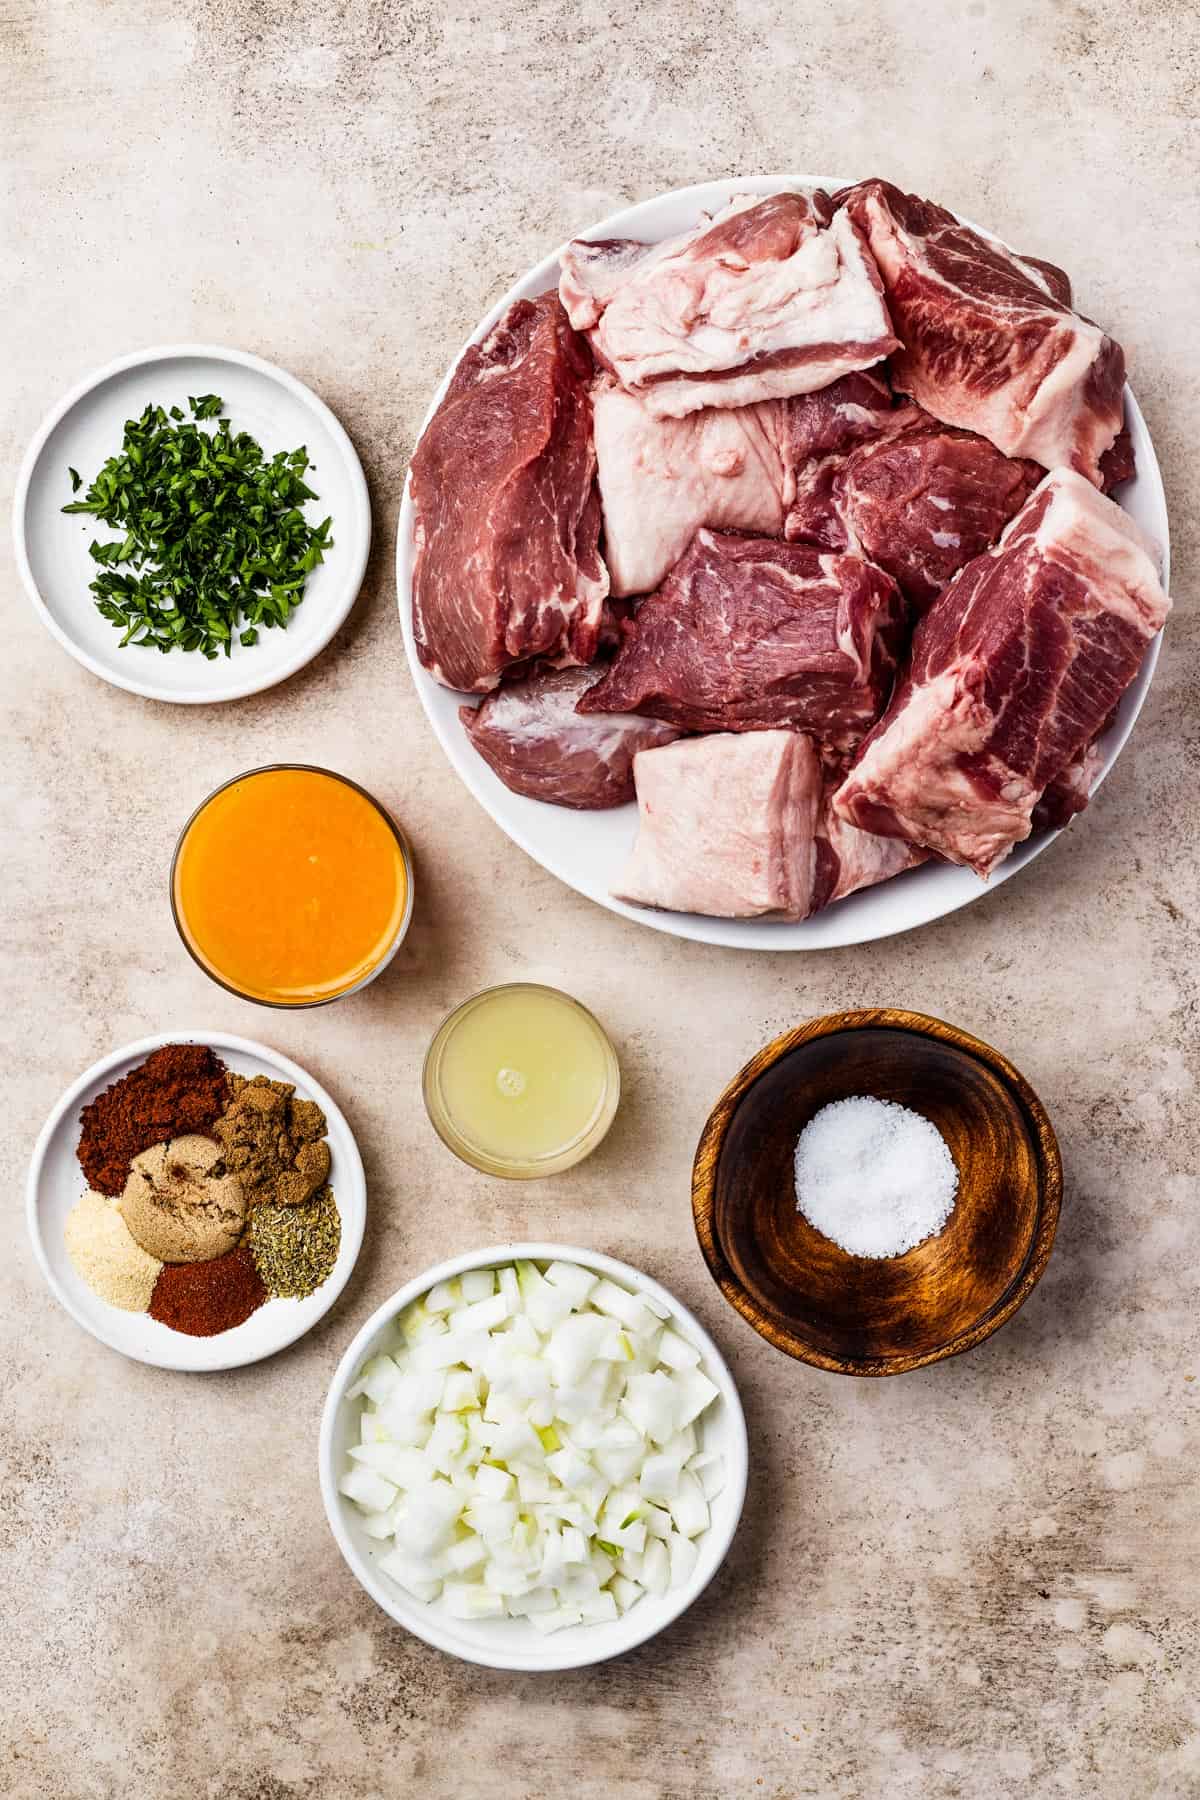 From top left: Chopped cilantro, pork butt, orange juice, lime juice, seasonings, salt, white onion.